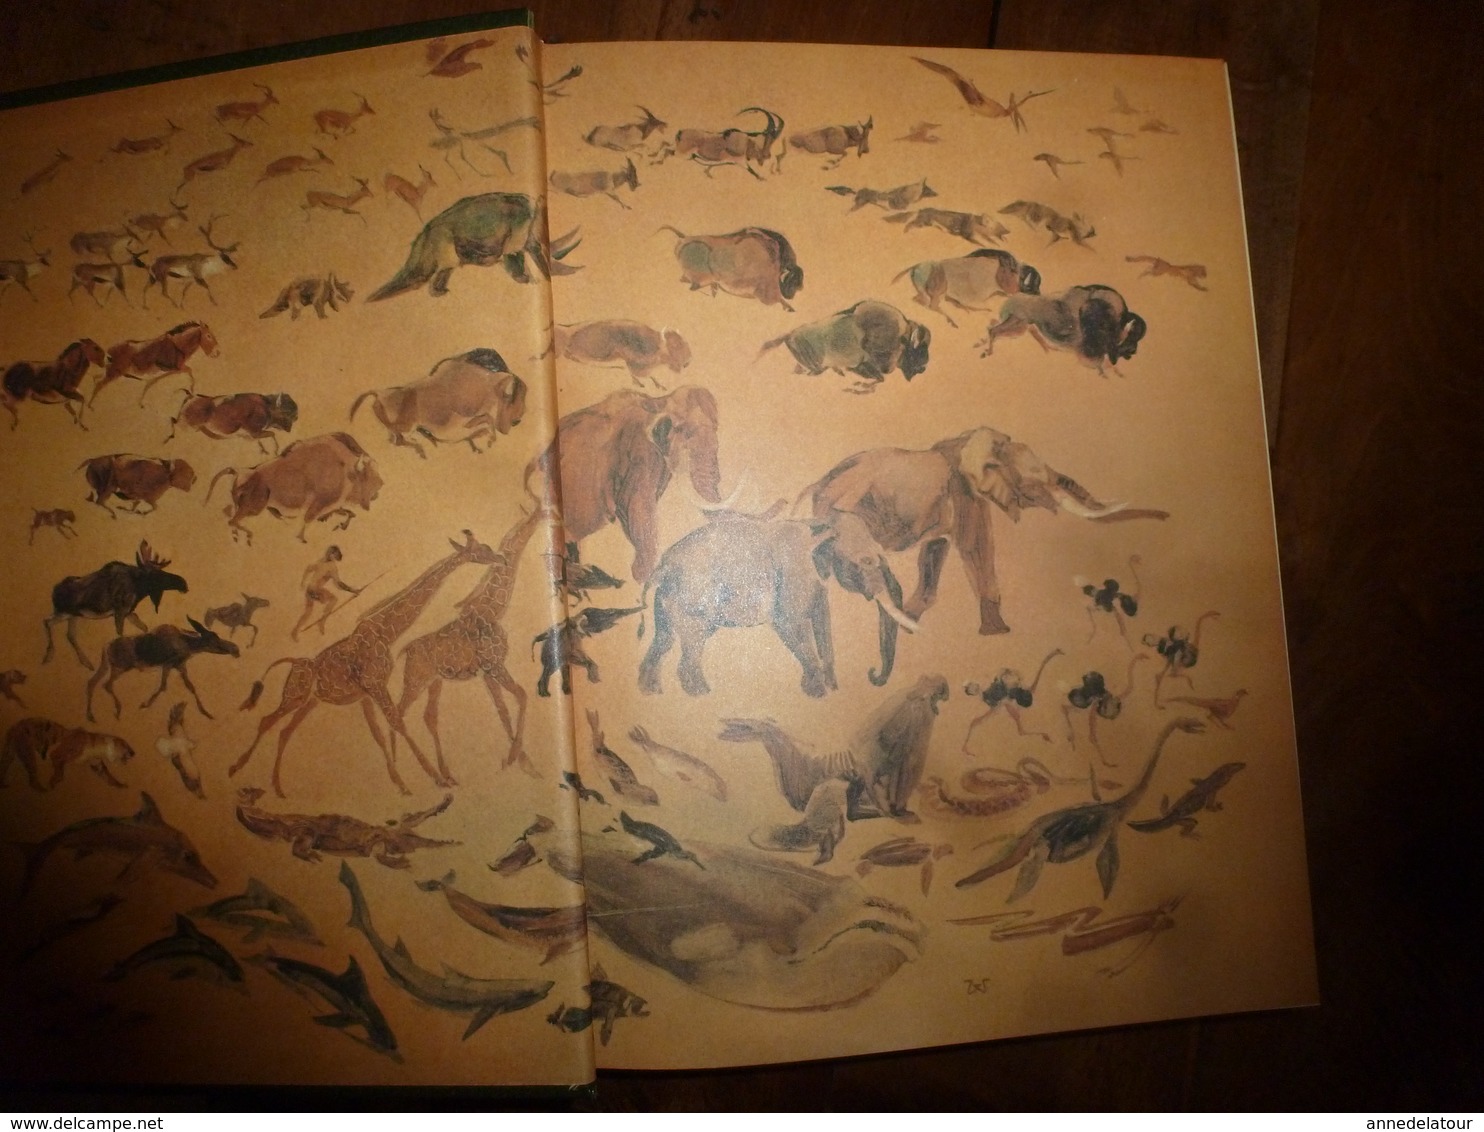 LE MONDE ANIMAL - Encyclopédie de la Vie des Bêtes -  en 13 volumes + index